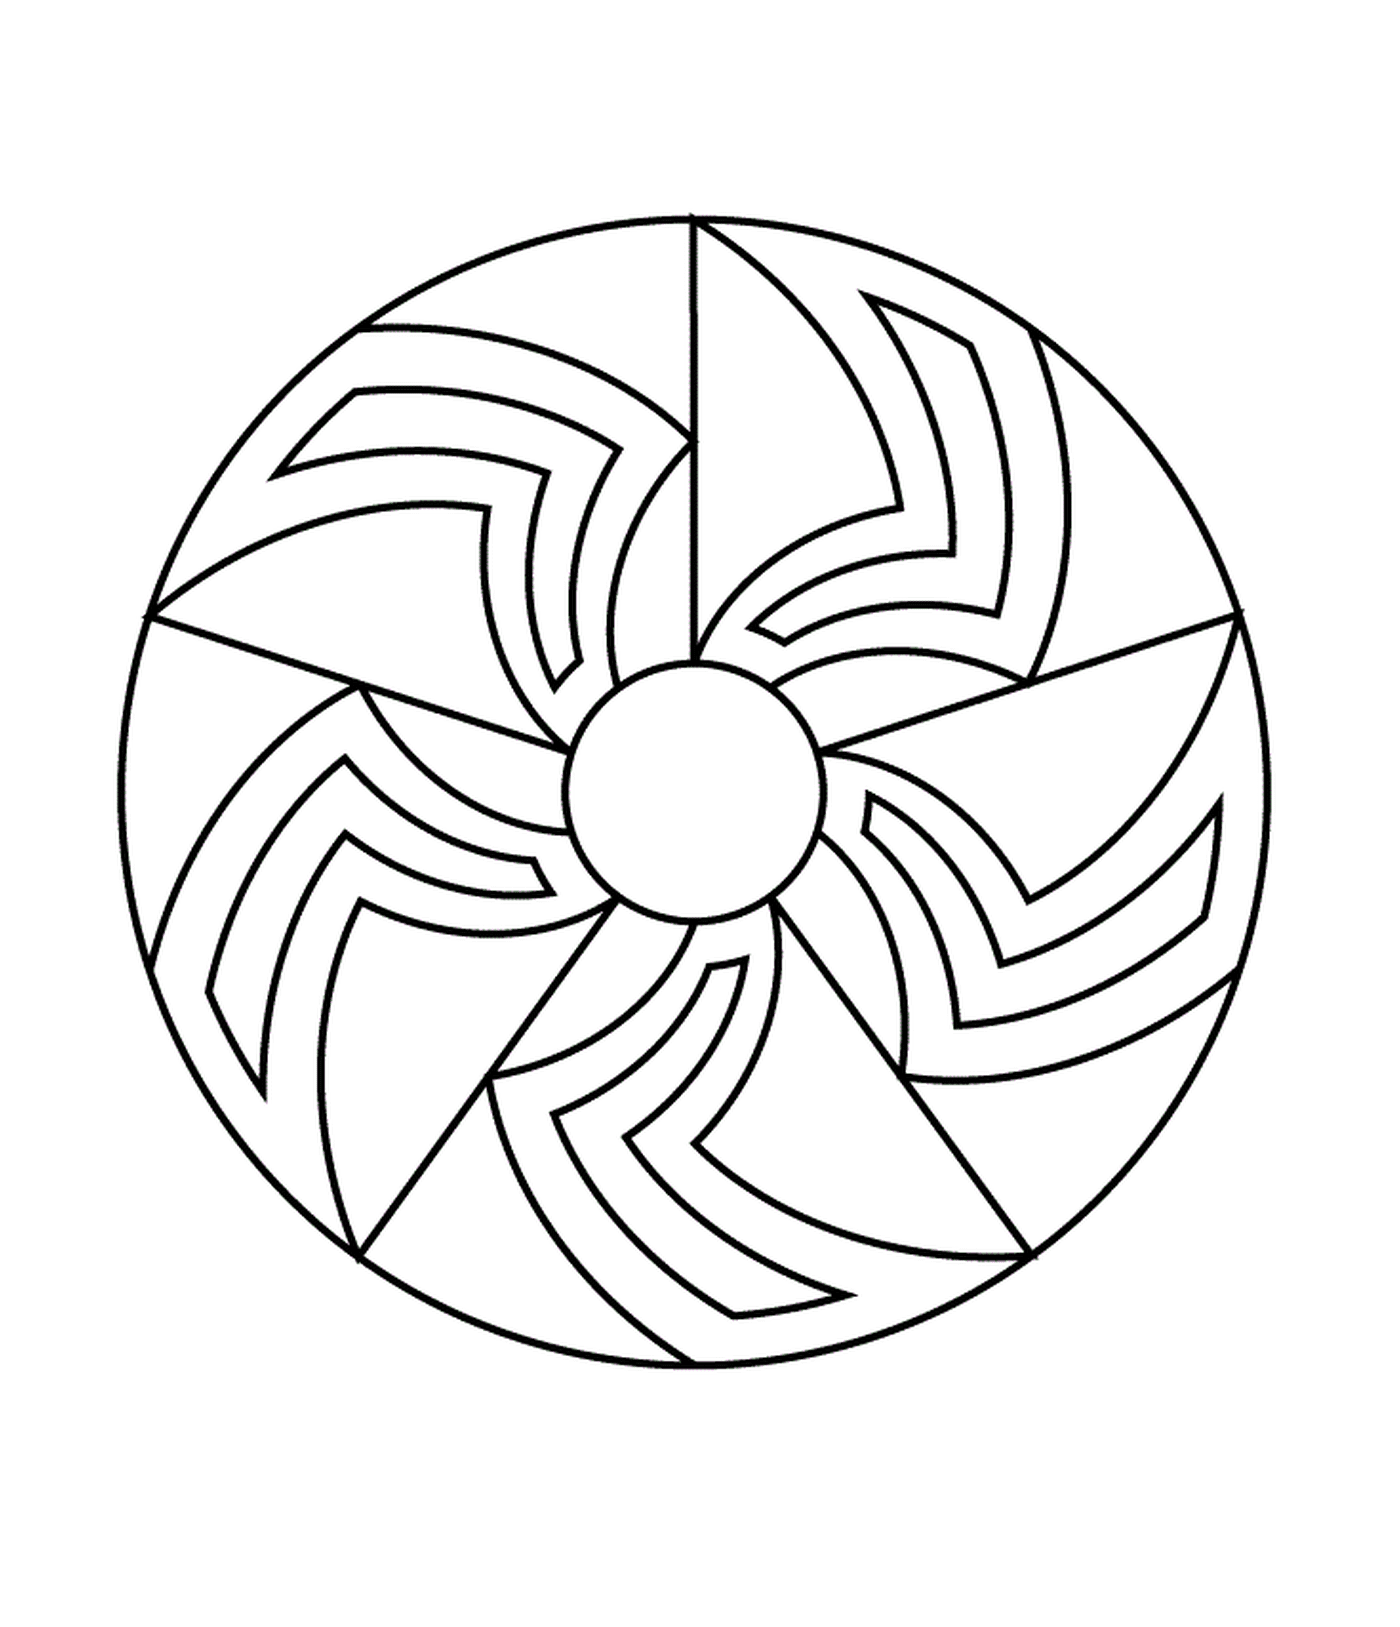   Un motif circulaire 